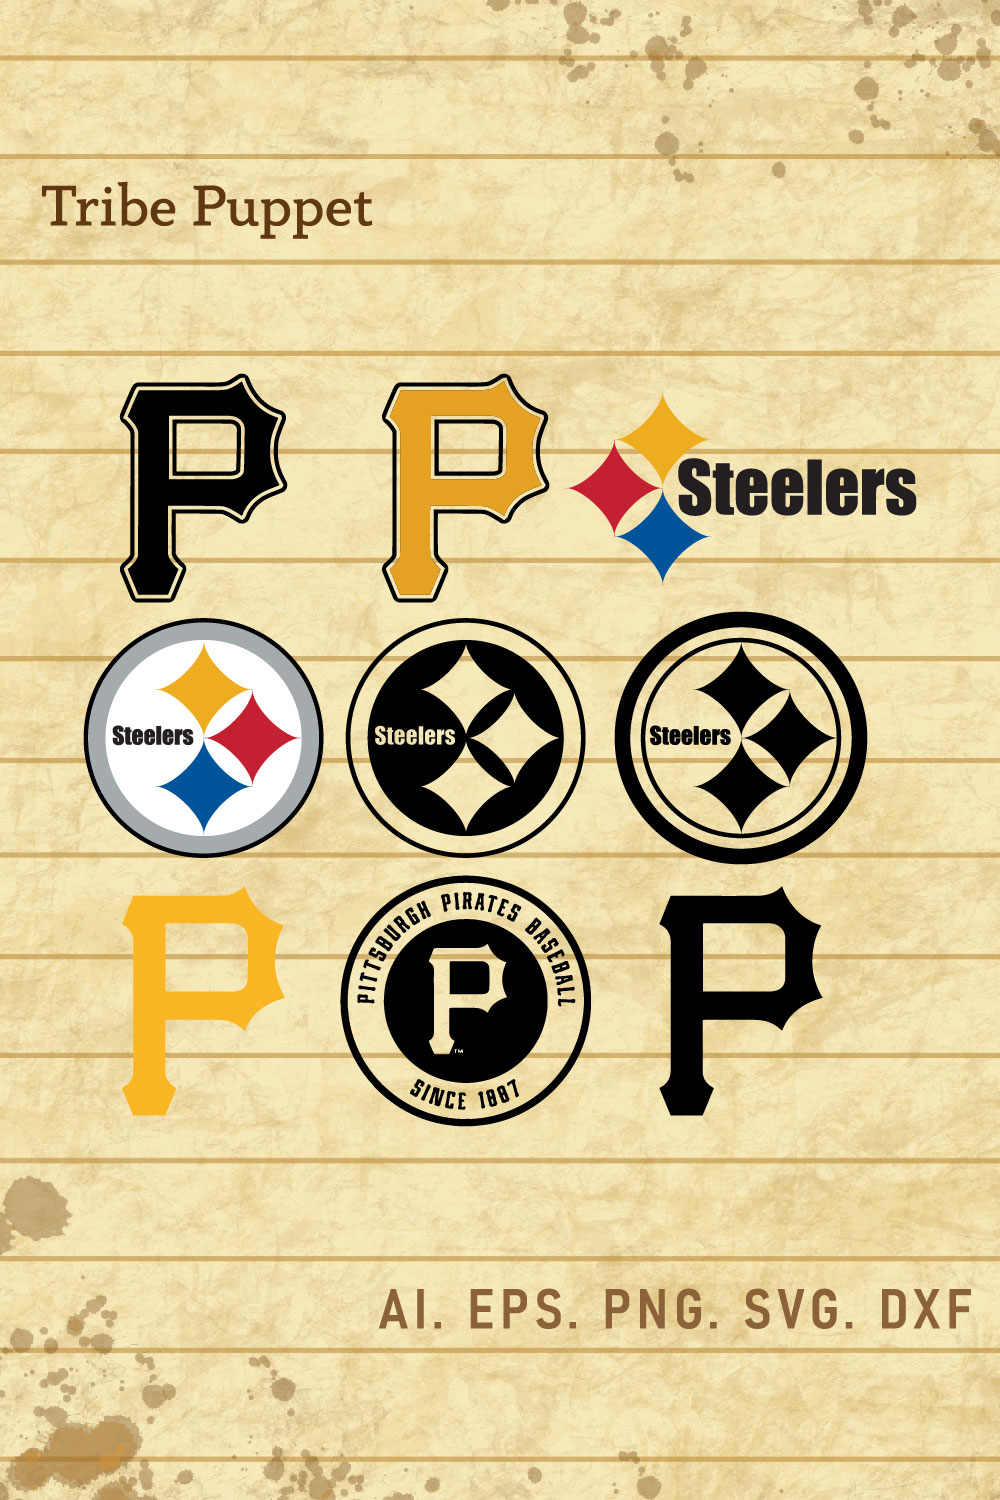 Pitsburgh Pirates Baseball Logo Vector set pinterest preview image.